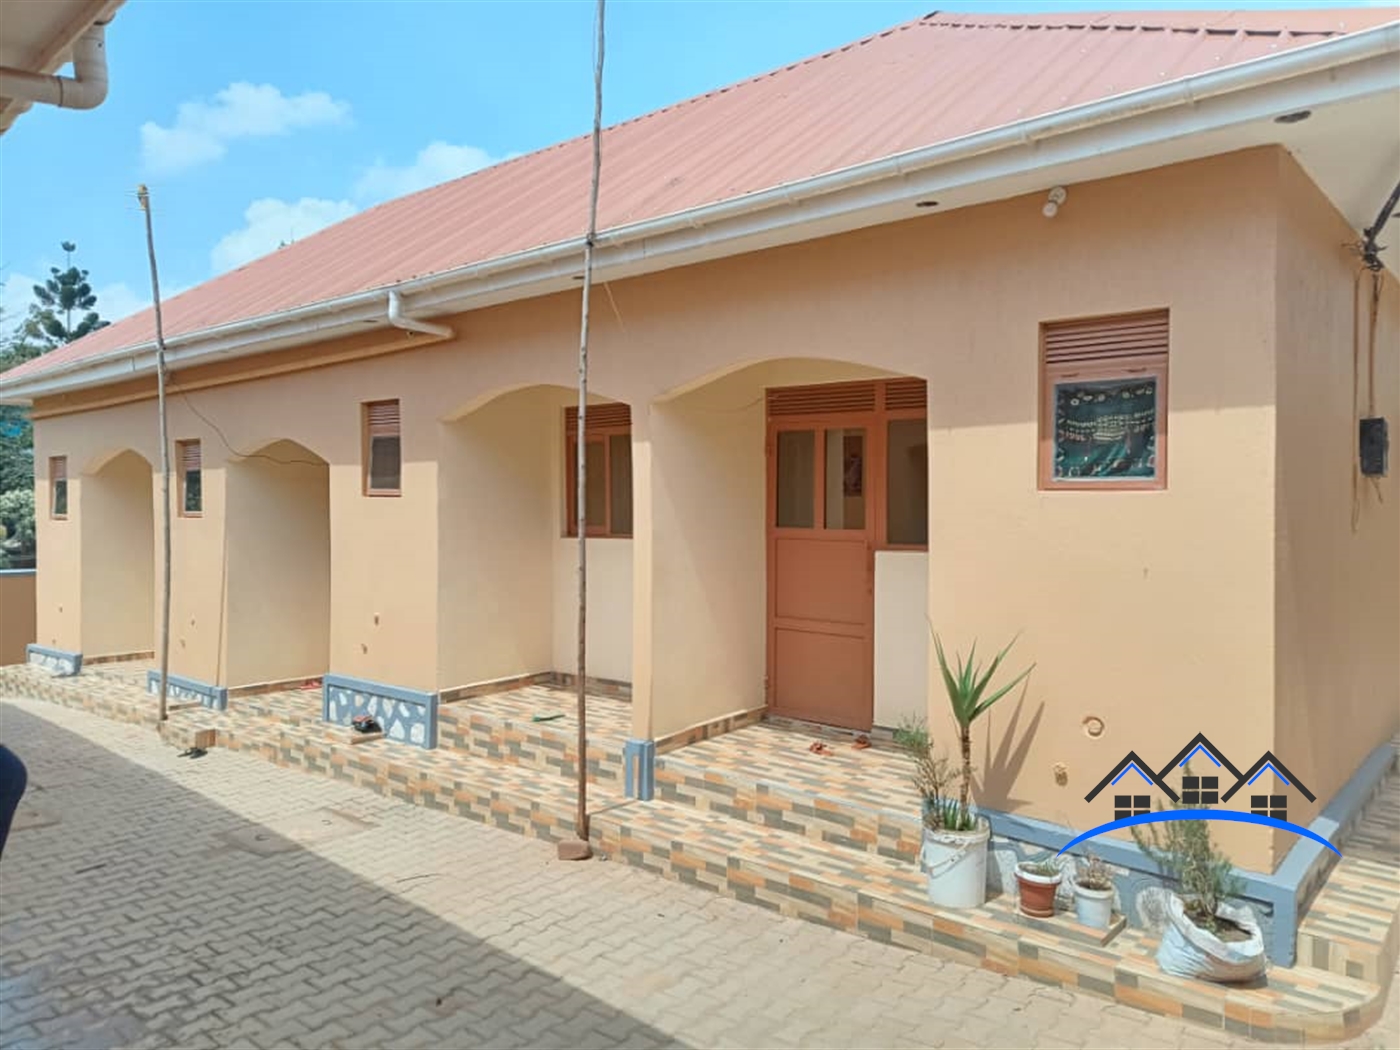 Rental units for sale in Kiwanga Mukono